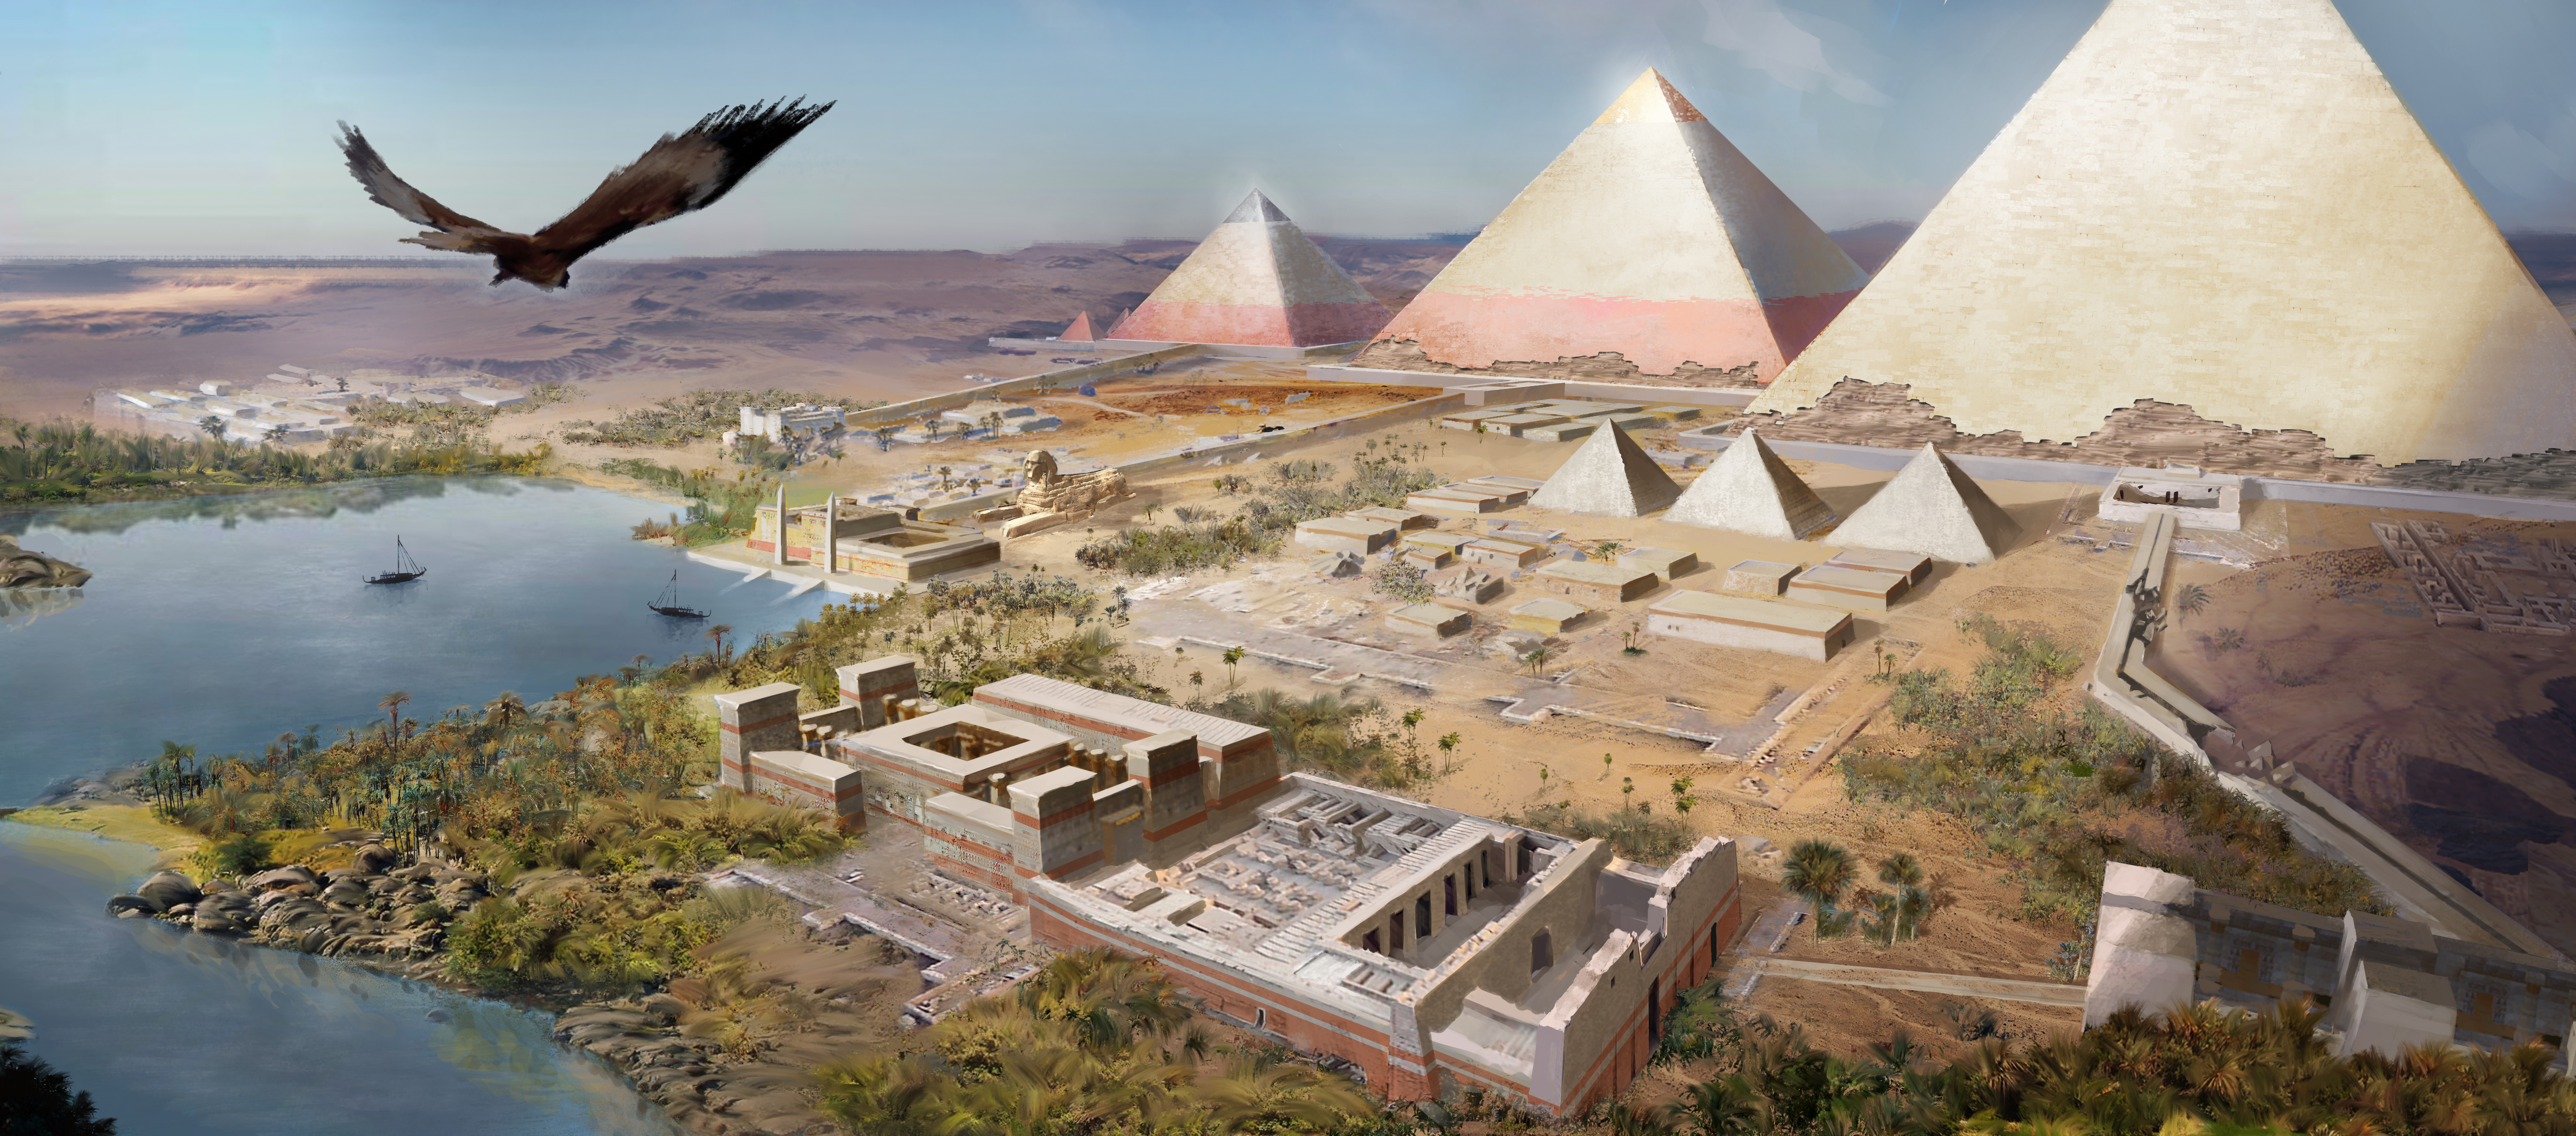 Assassins Creed Origins Video Games Artwork Assassins Creed Egypt Landscape Pyramids Of Giza Eagle U 5479x2416